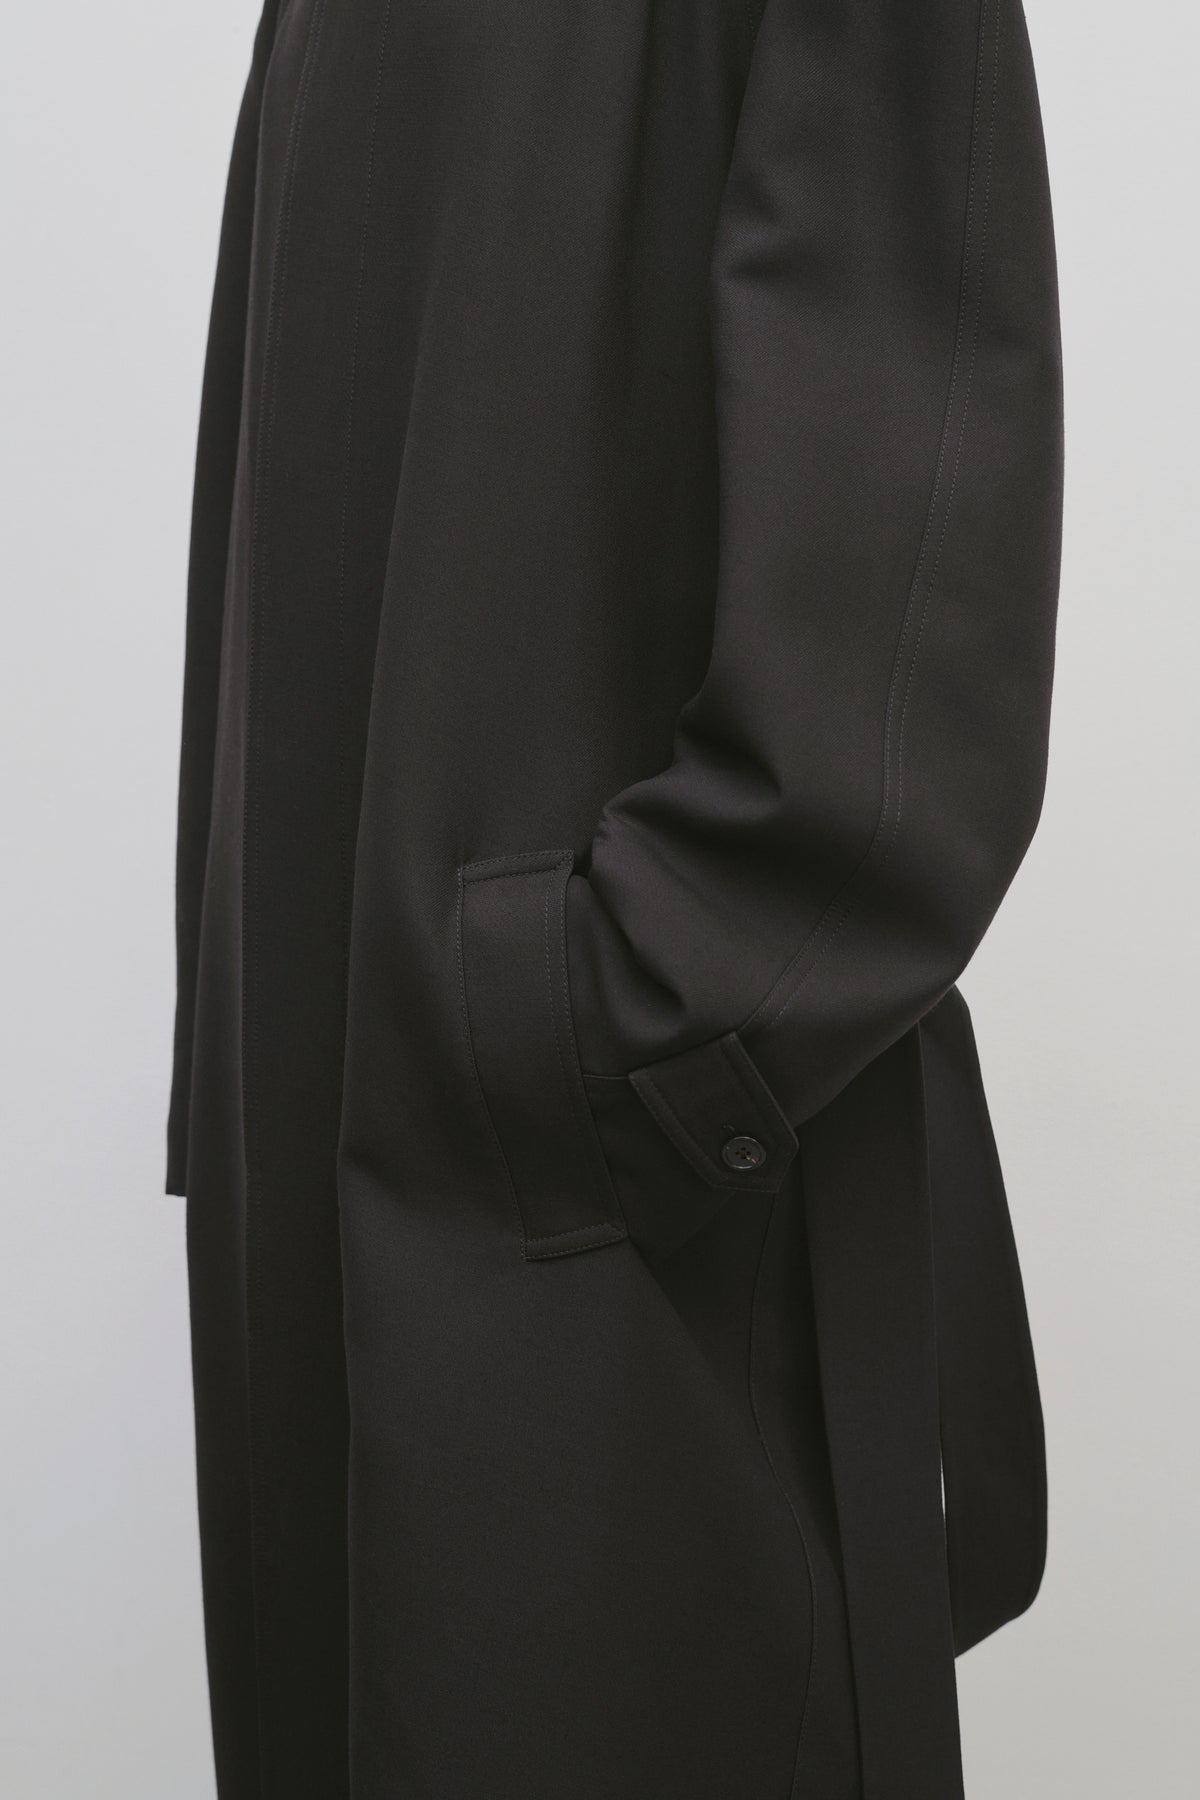 Savile Row Tailored Black Virgin Wool Coat Overcoat Contour Cut Single  Breast